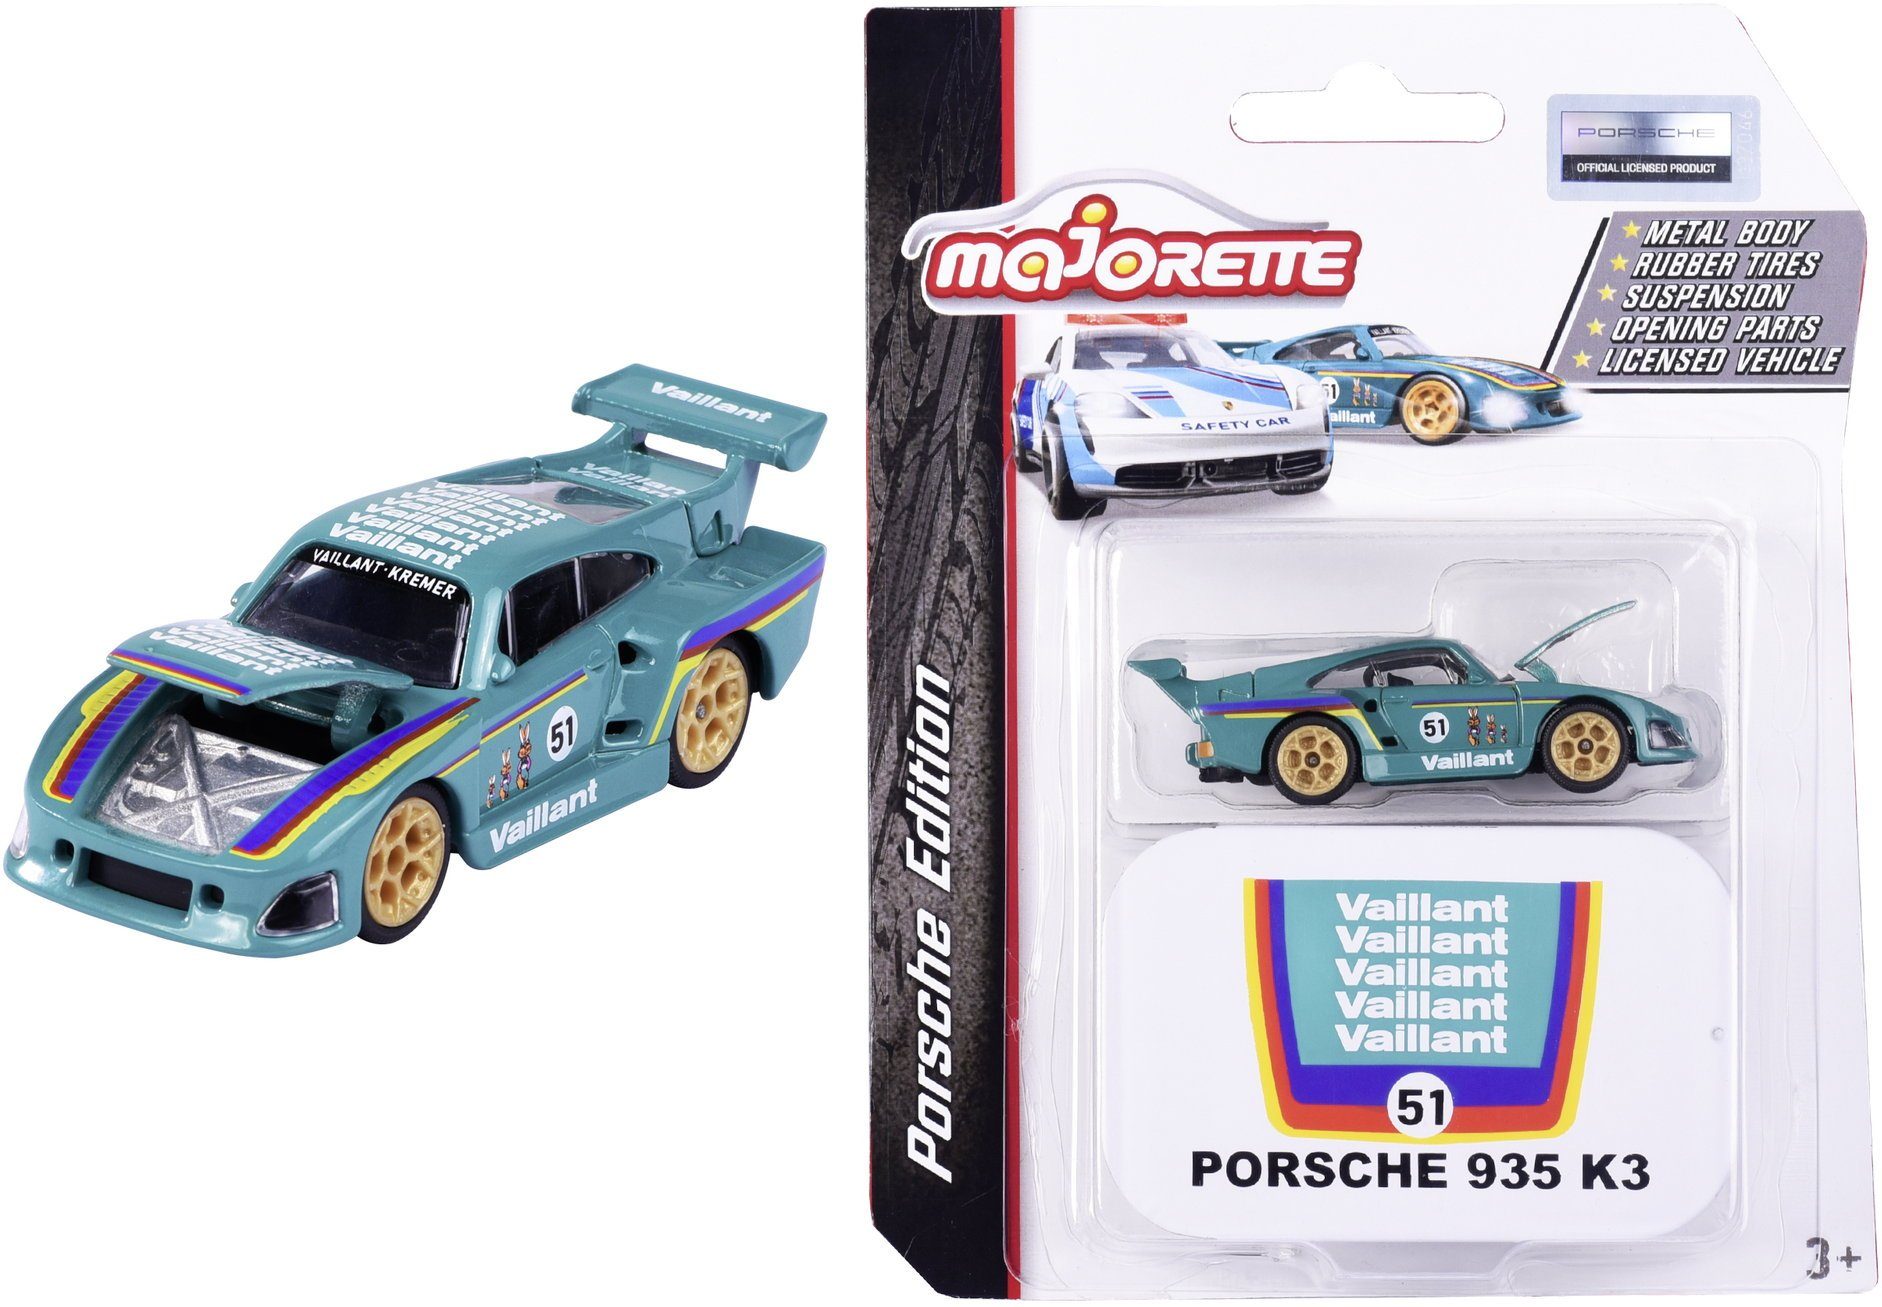 Deluxe Porsche Motorsport K3 212053161Q02 majORETTE Porsche Spielzeug-Auto 953 Edition